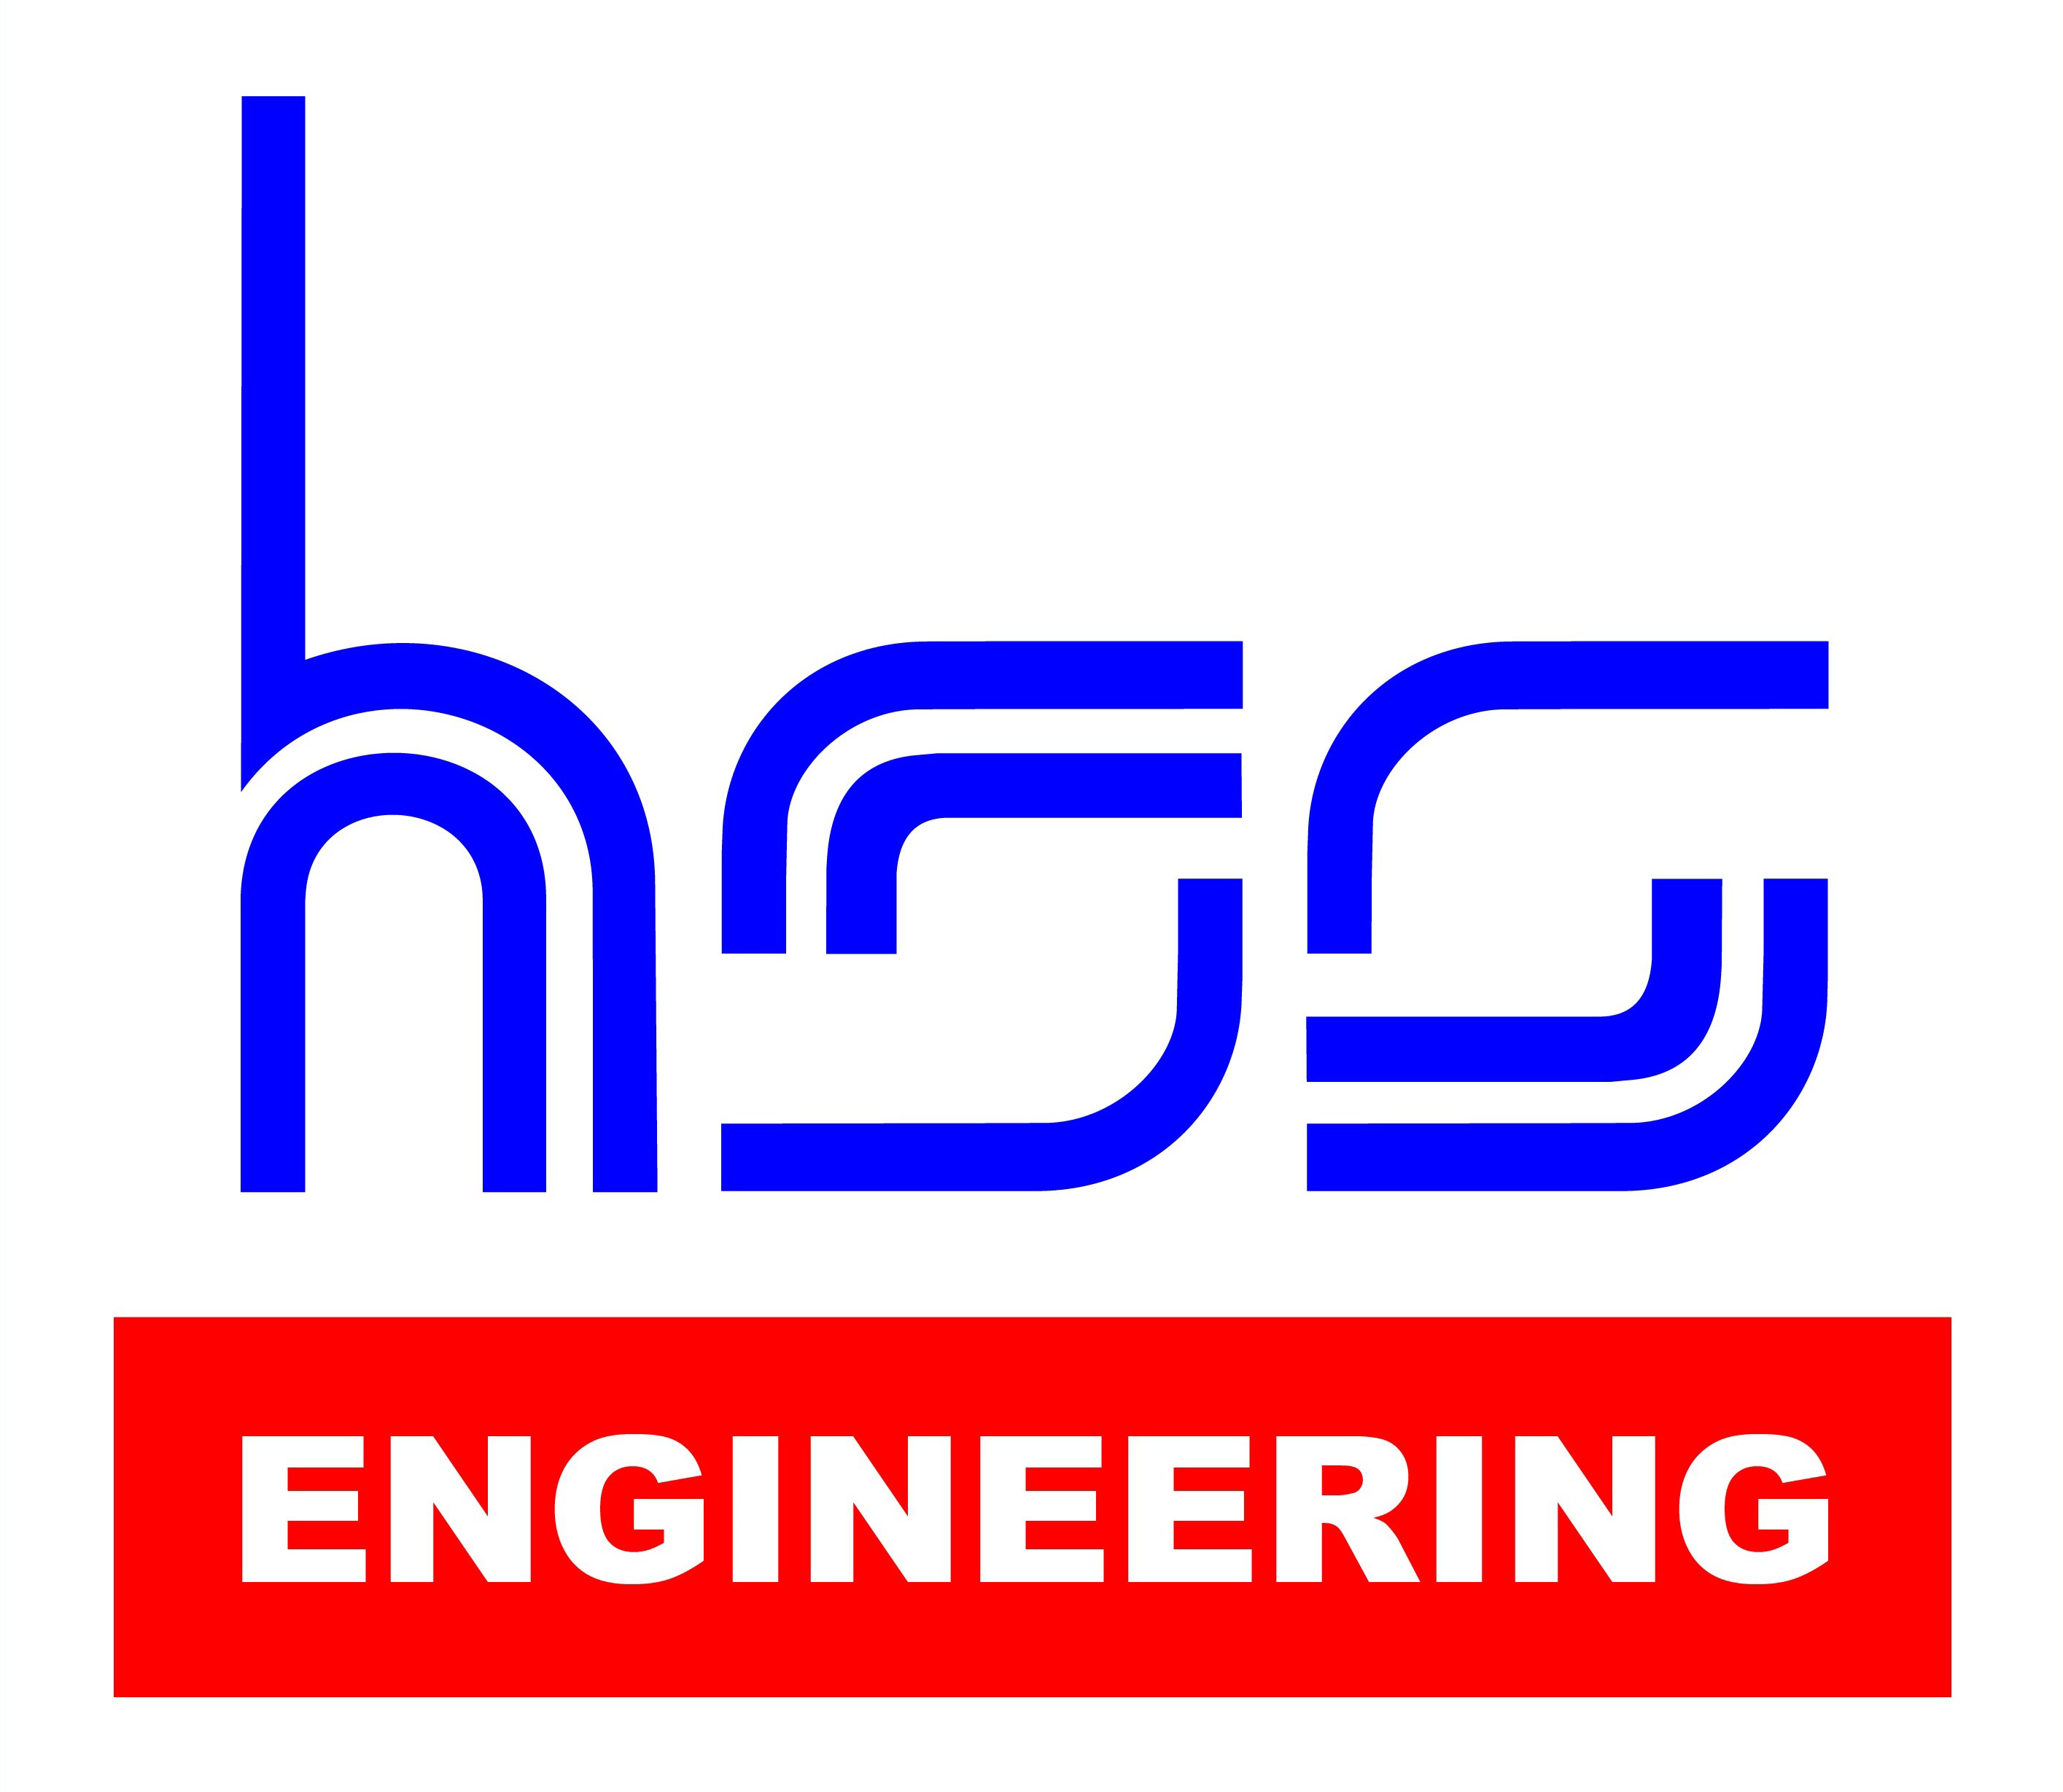 HSS Group